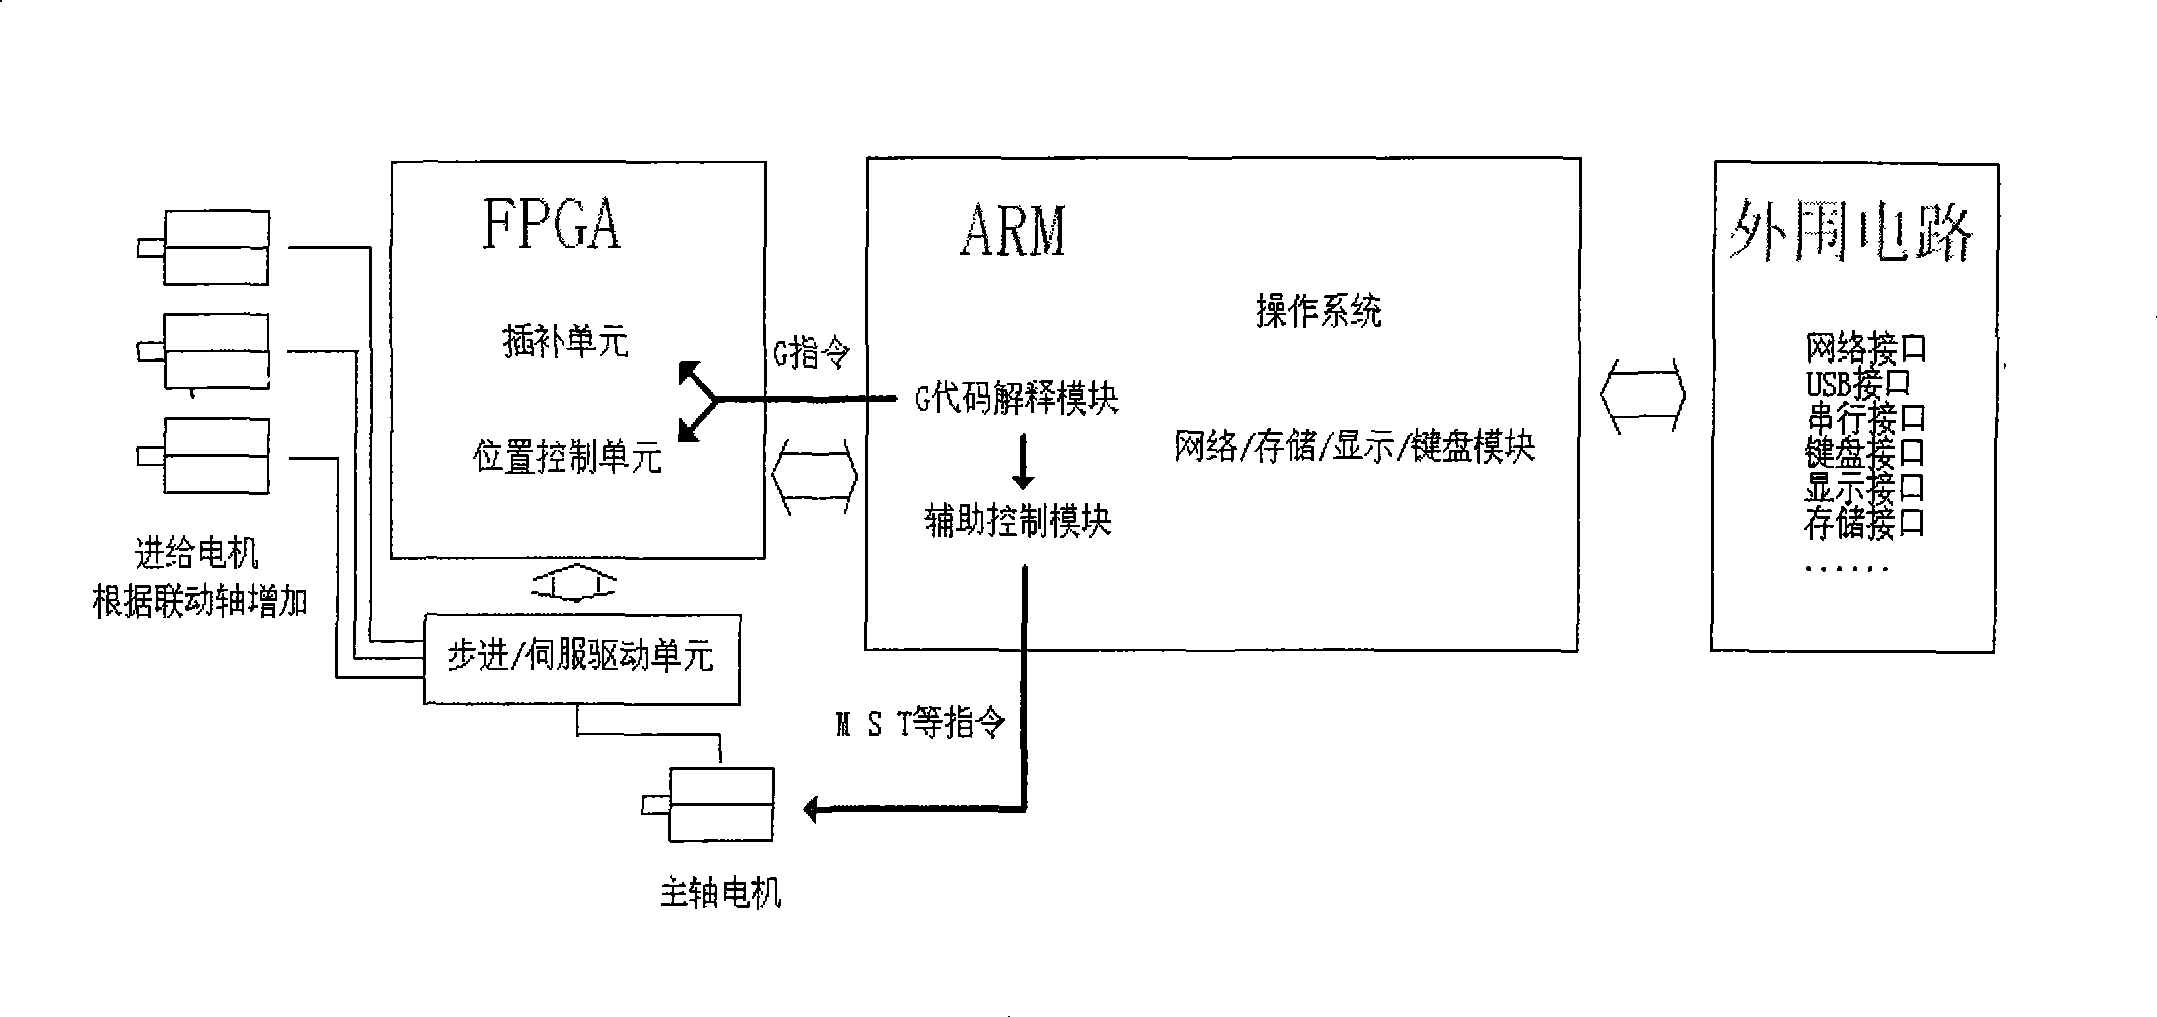 Embedded digital control system based on ARM7 and FPGA